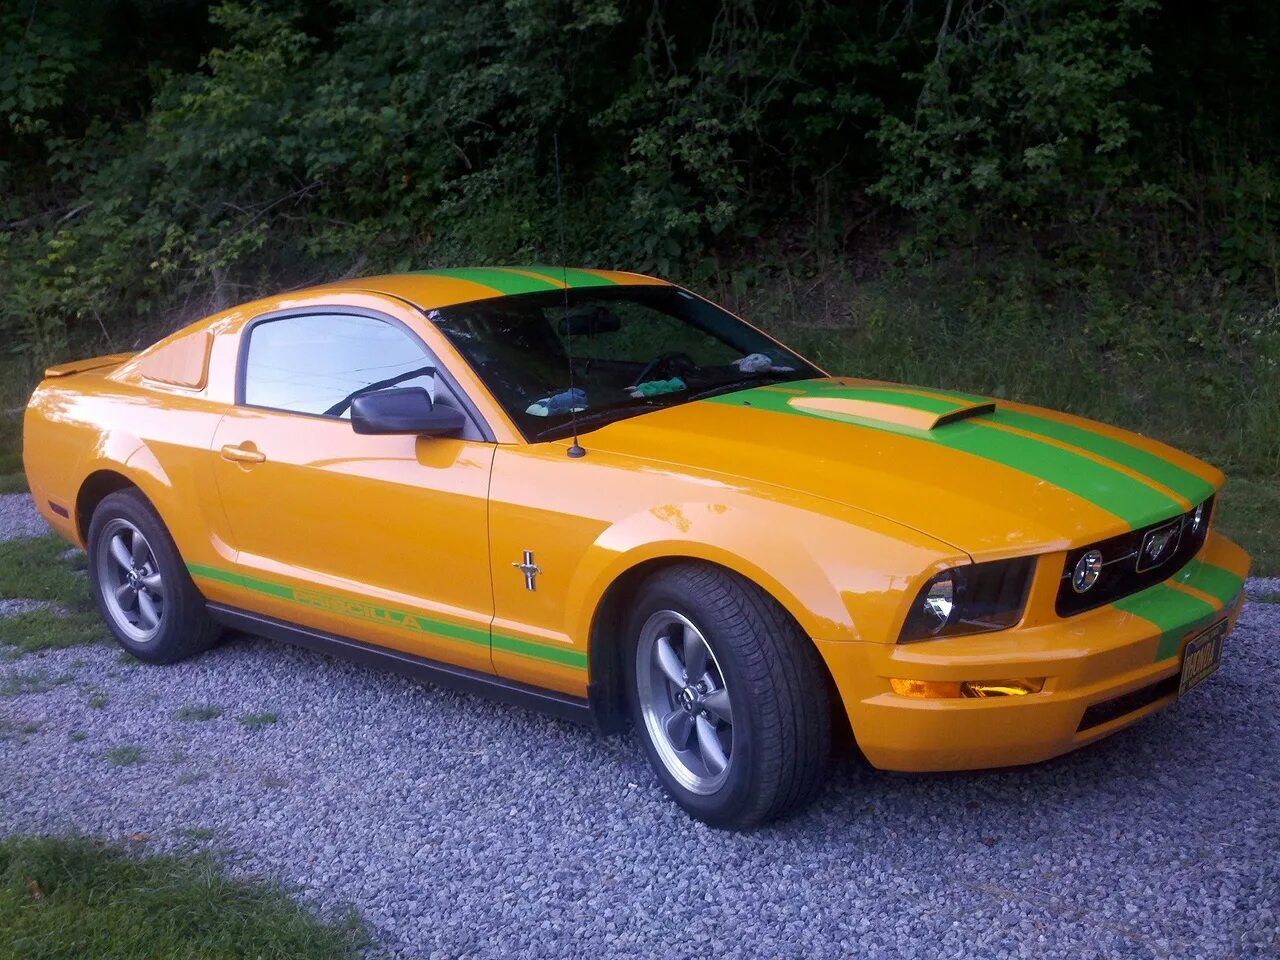 Форд Мустанг 2008. Форд Мустанг 2008г. Форд Мустанг оранжевый. Ford Mustang 2008 Color. Мустанг 2008